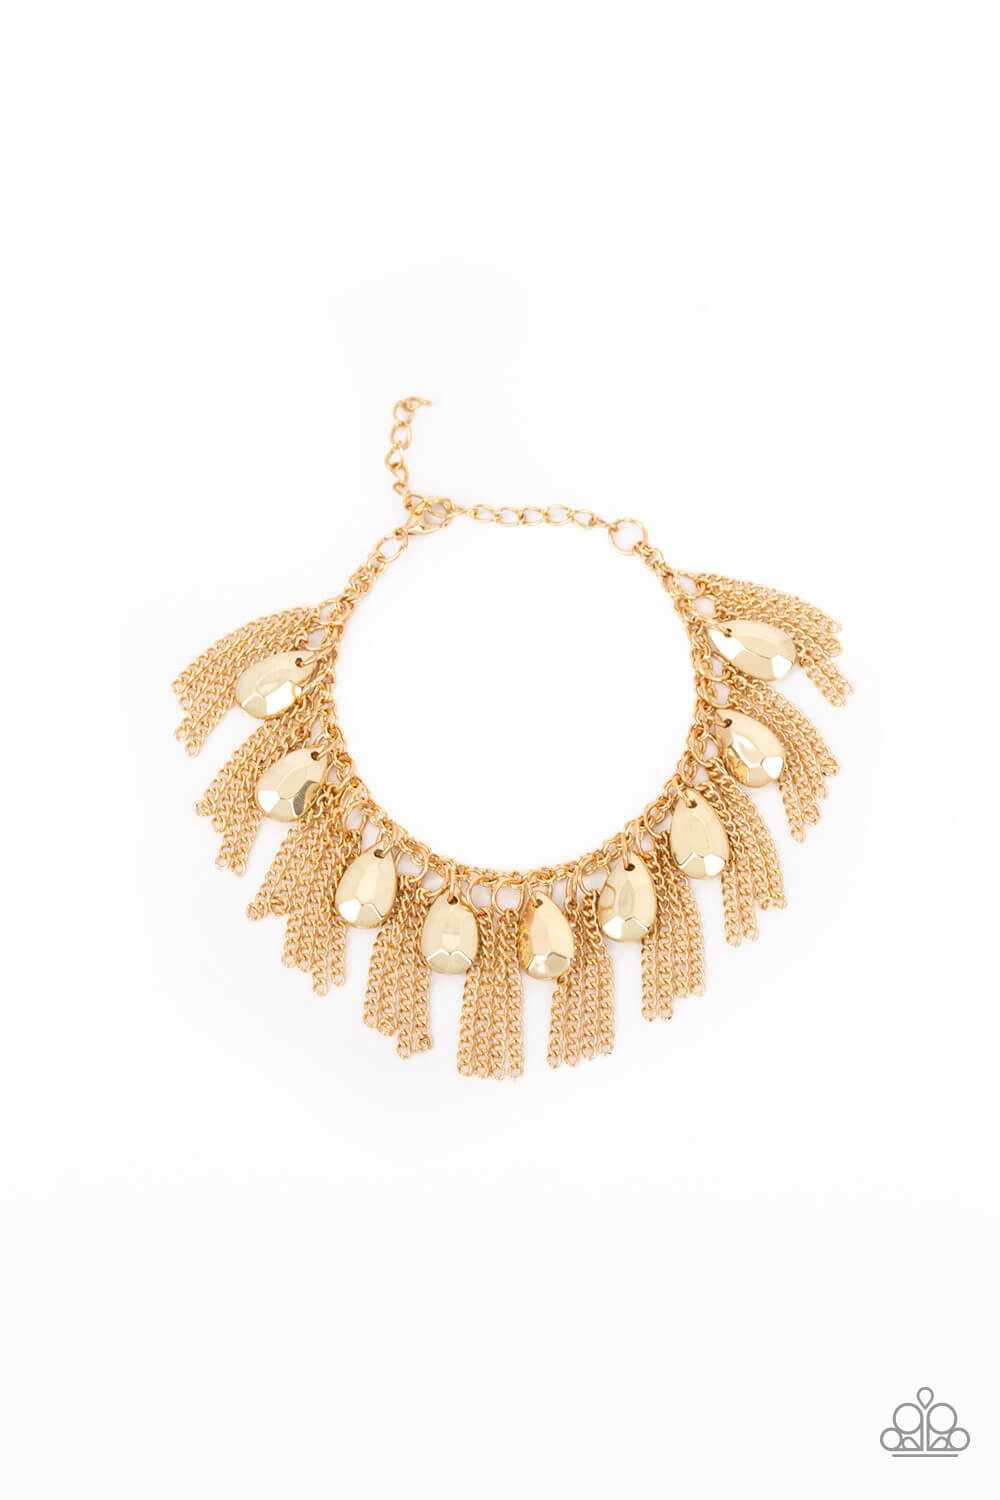 Bragging Rights - Gold Necklace & Bracelet Combo Set - Princess Glam Shop